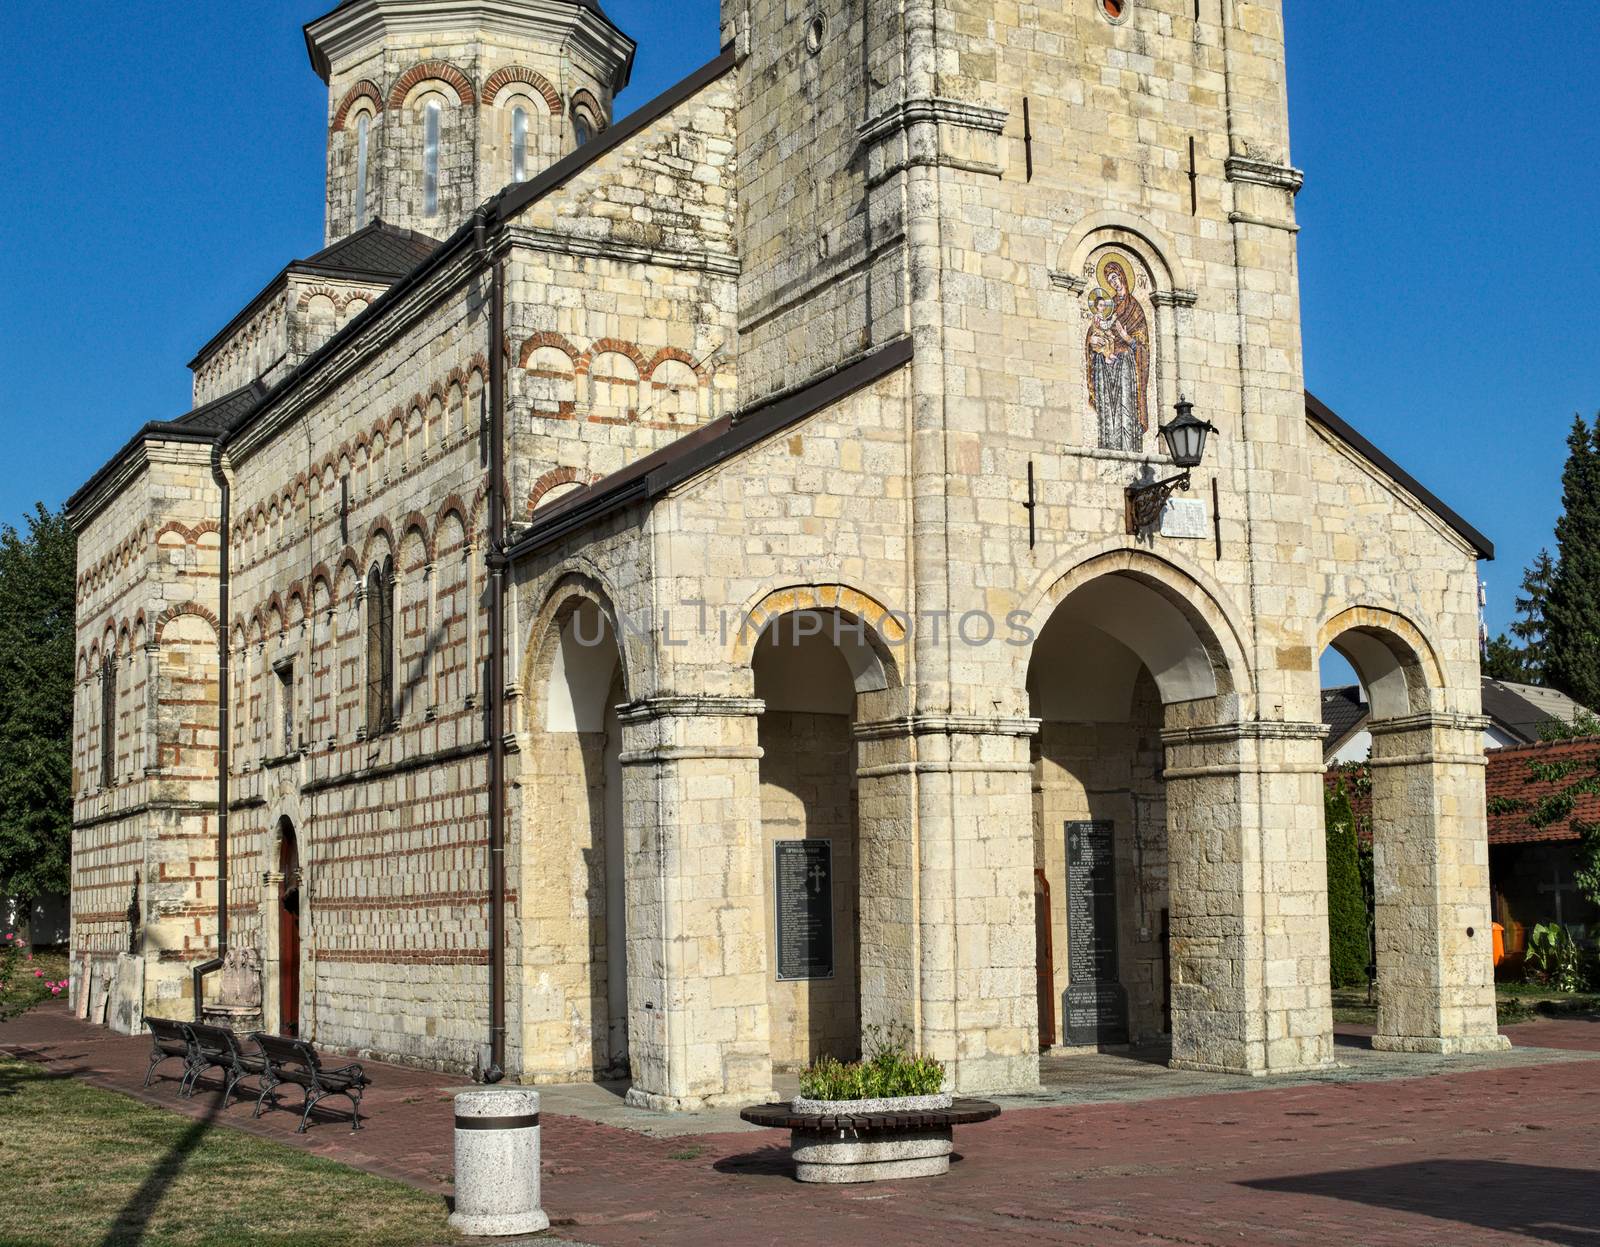 Orthodox stone church in Sremska Kamenica, Serbia